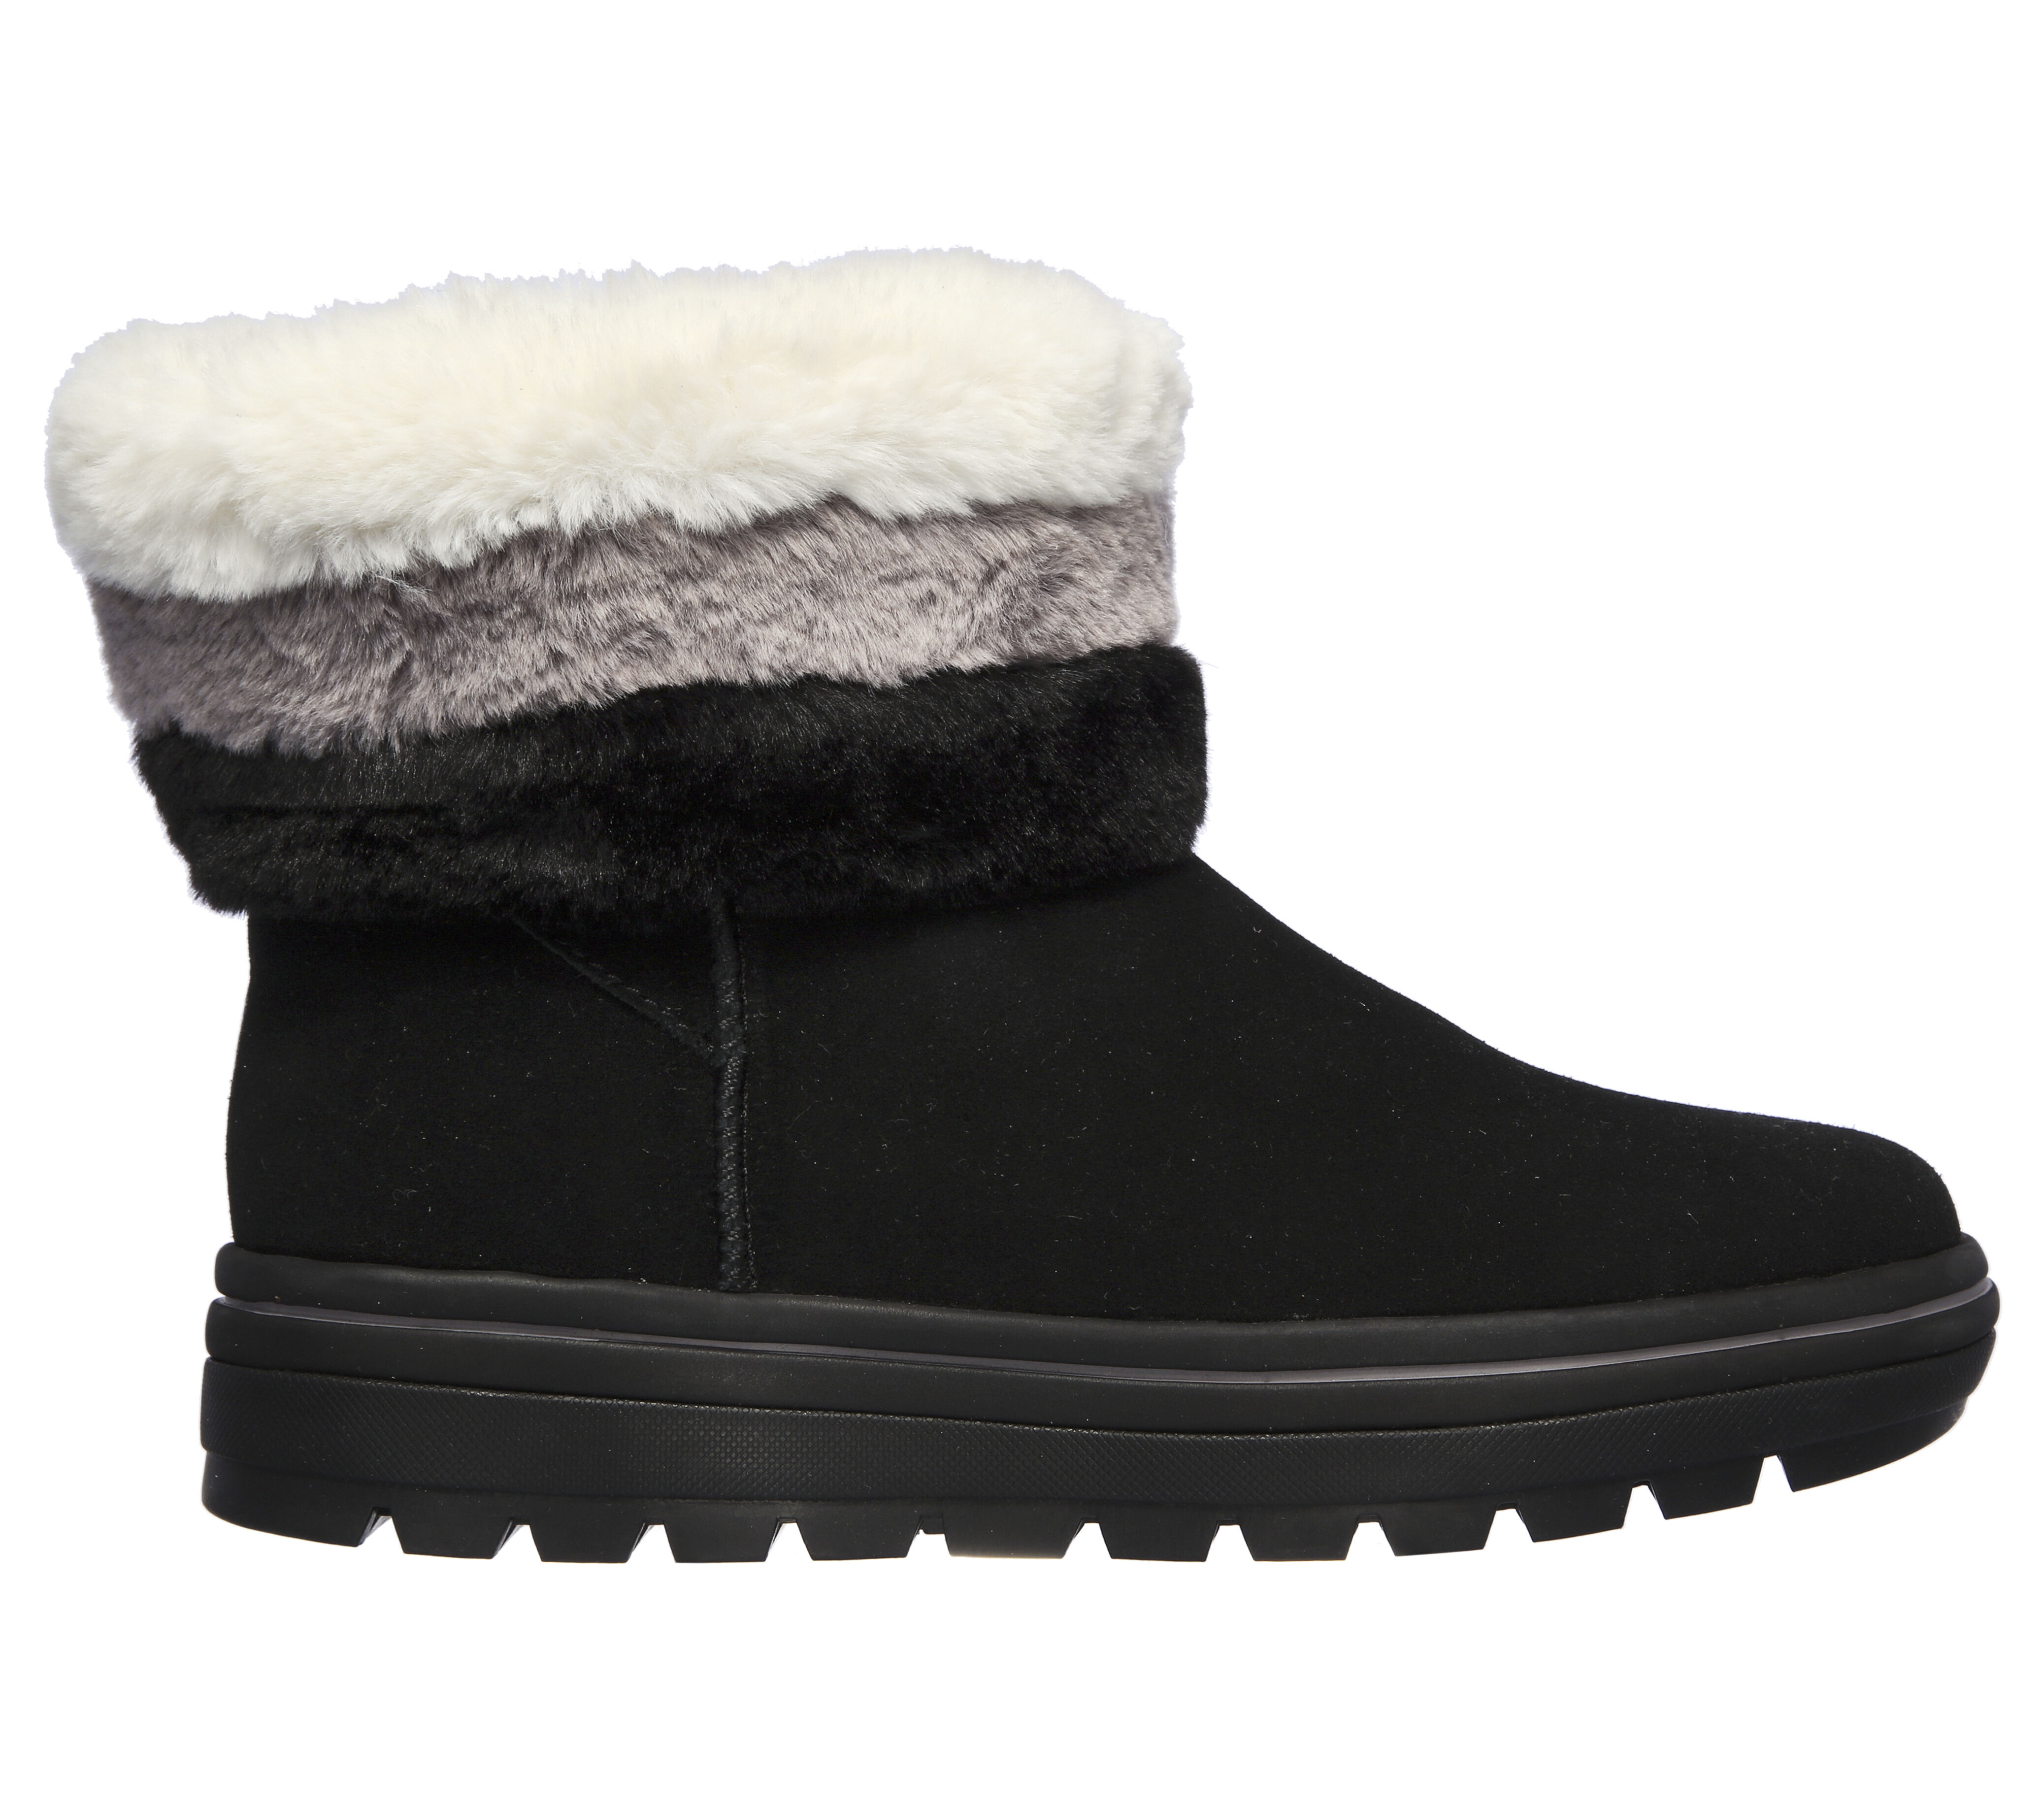 skechers elsick womens winter boots